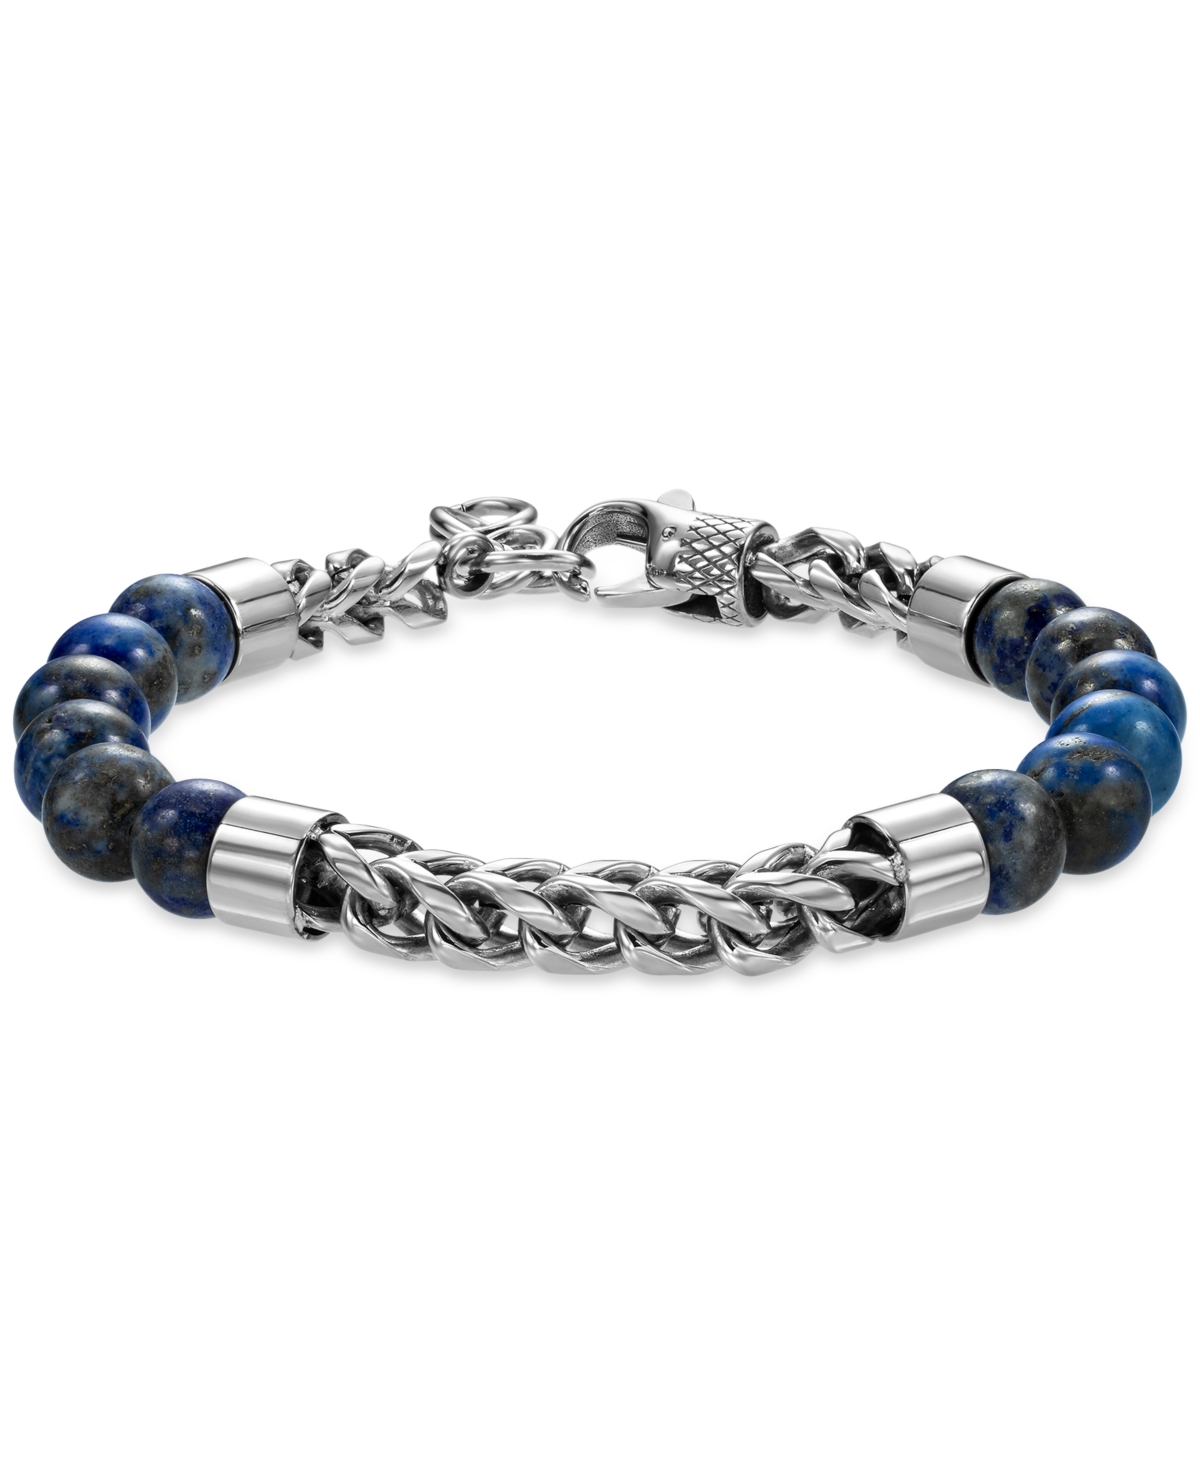 Men's Lapis Lazuli Bead & Chain Bracelet in Stainless Steel (Also in Onyx & Tiger Eye) - Onyx